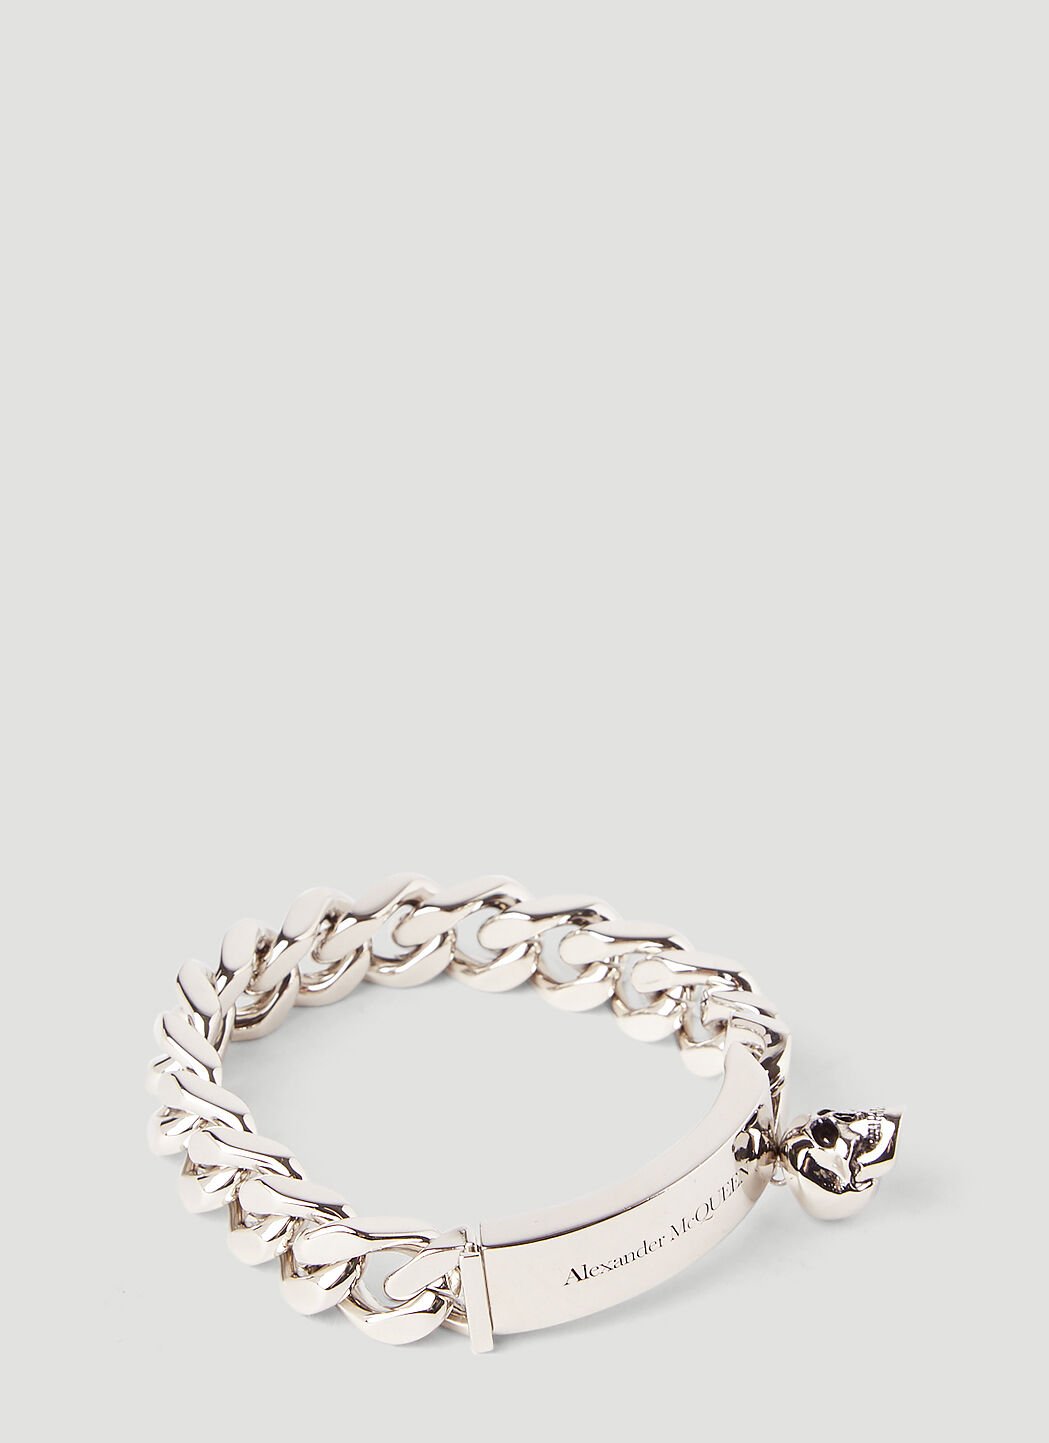 Alexander McQueen Skull Charm Curb-Chain Bracelet 화이트 amq0149025